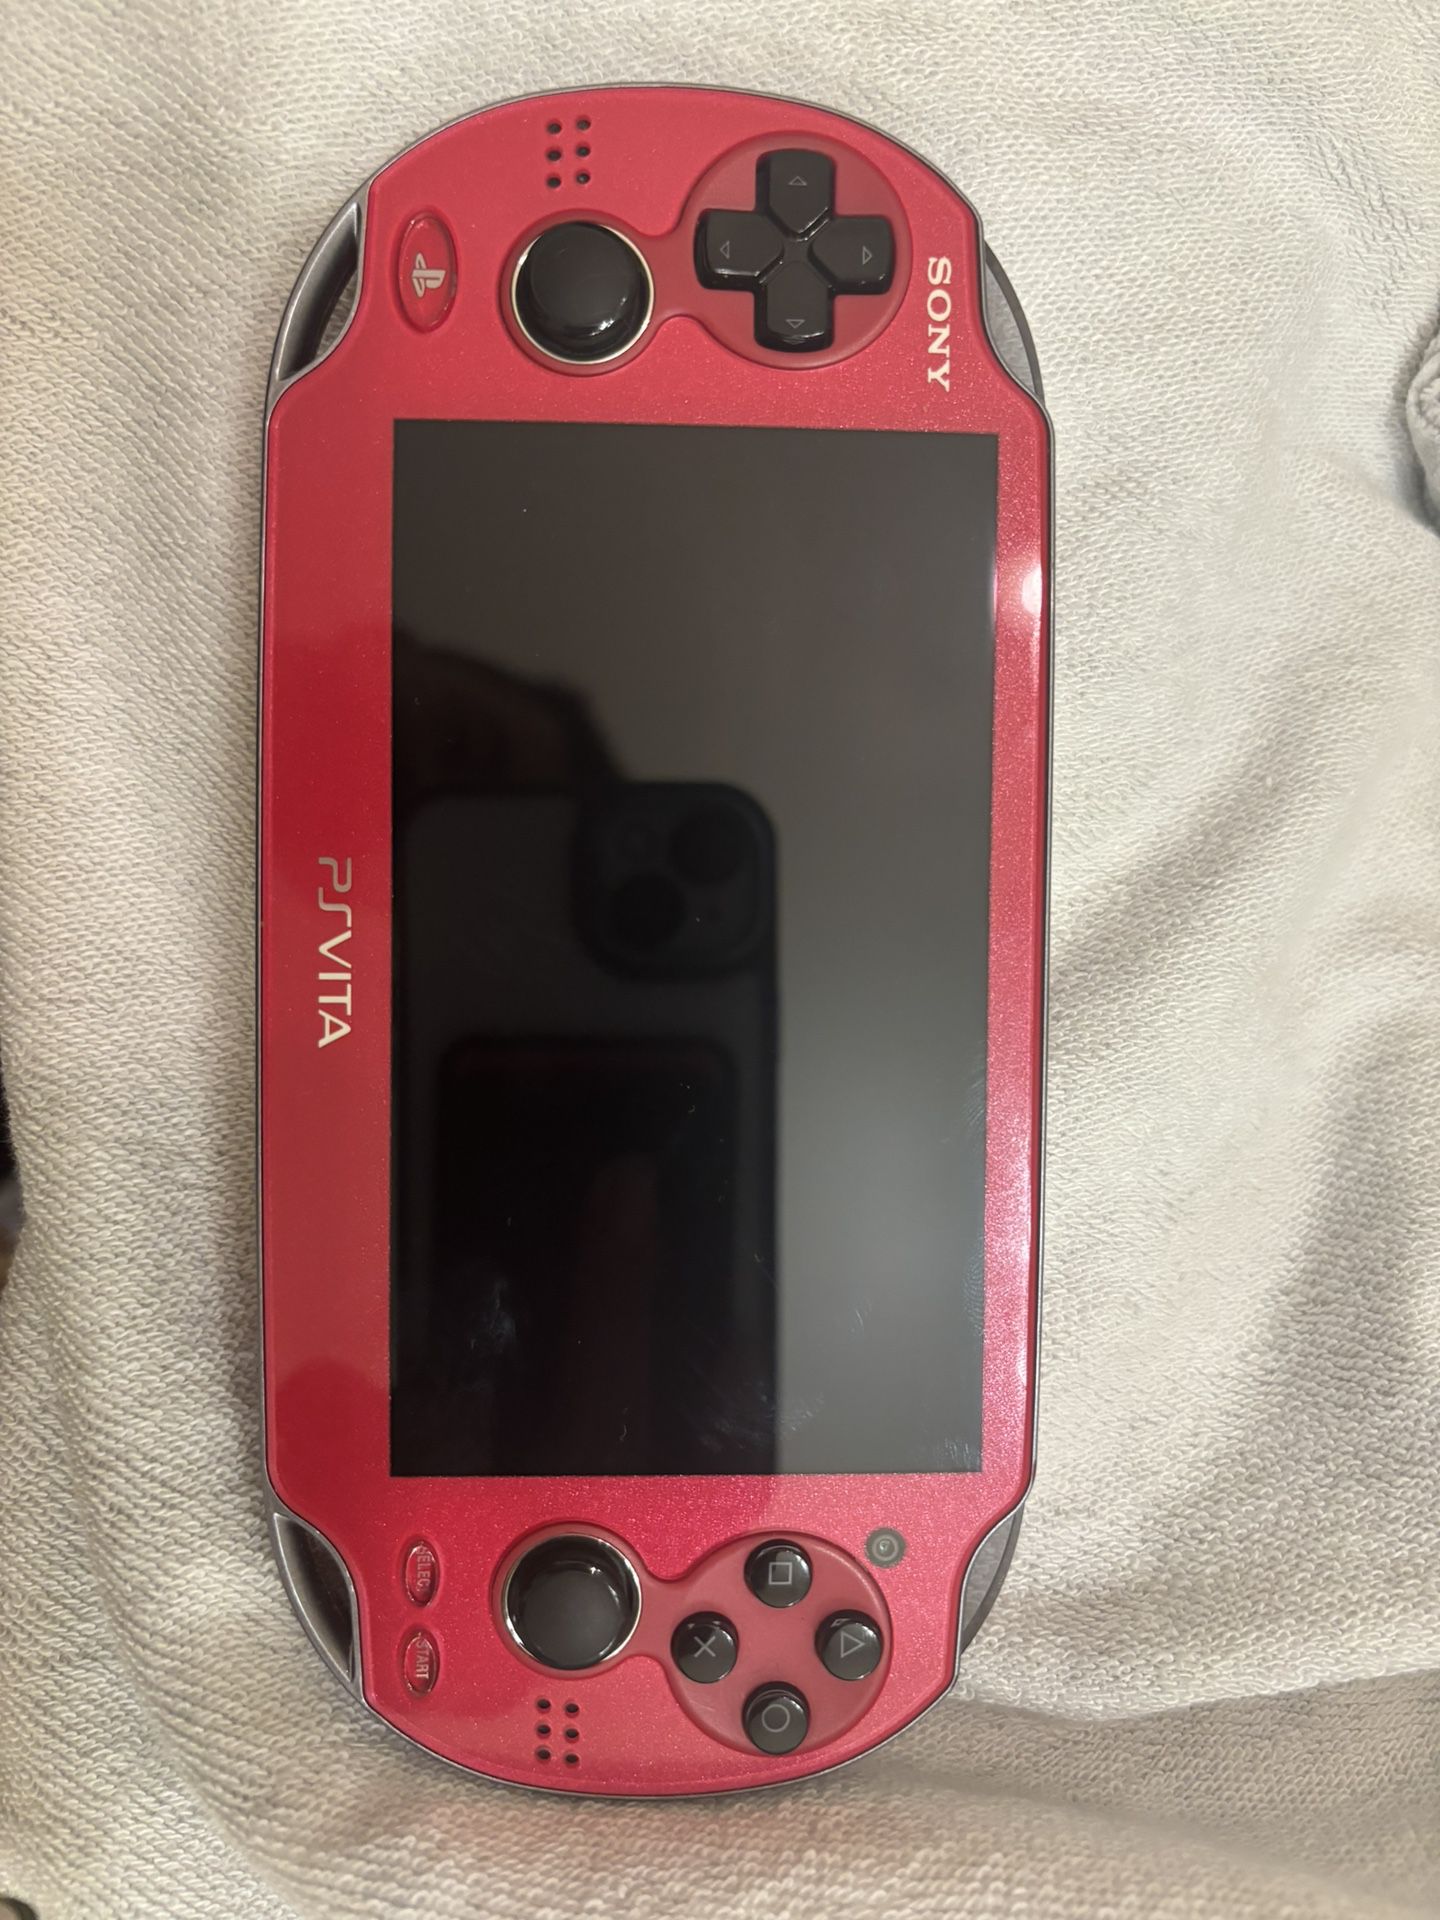 Modded PSP Vita 256gb Mint Condition